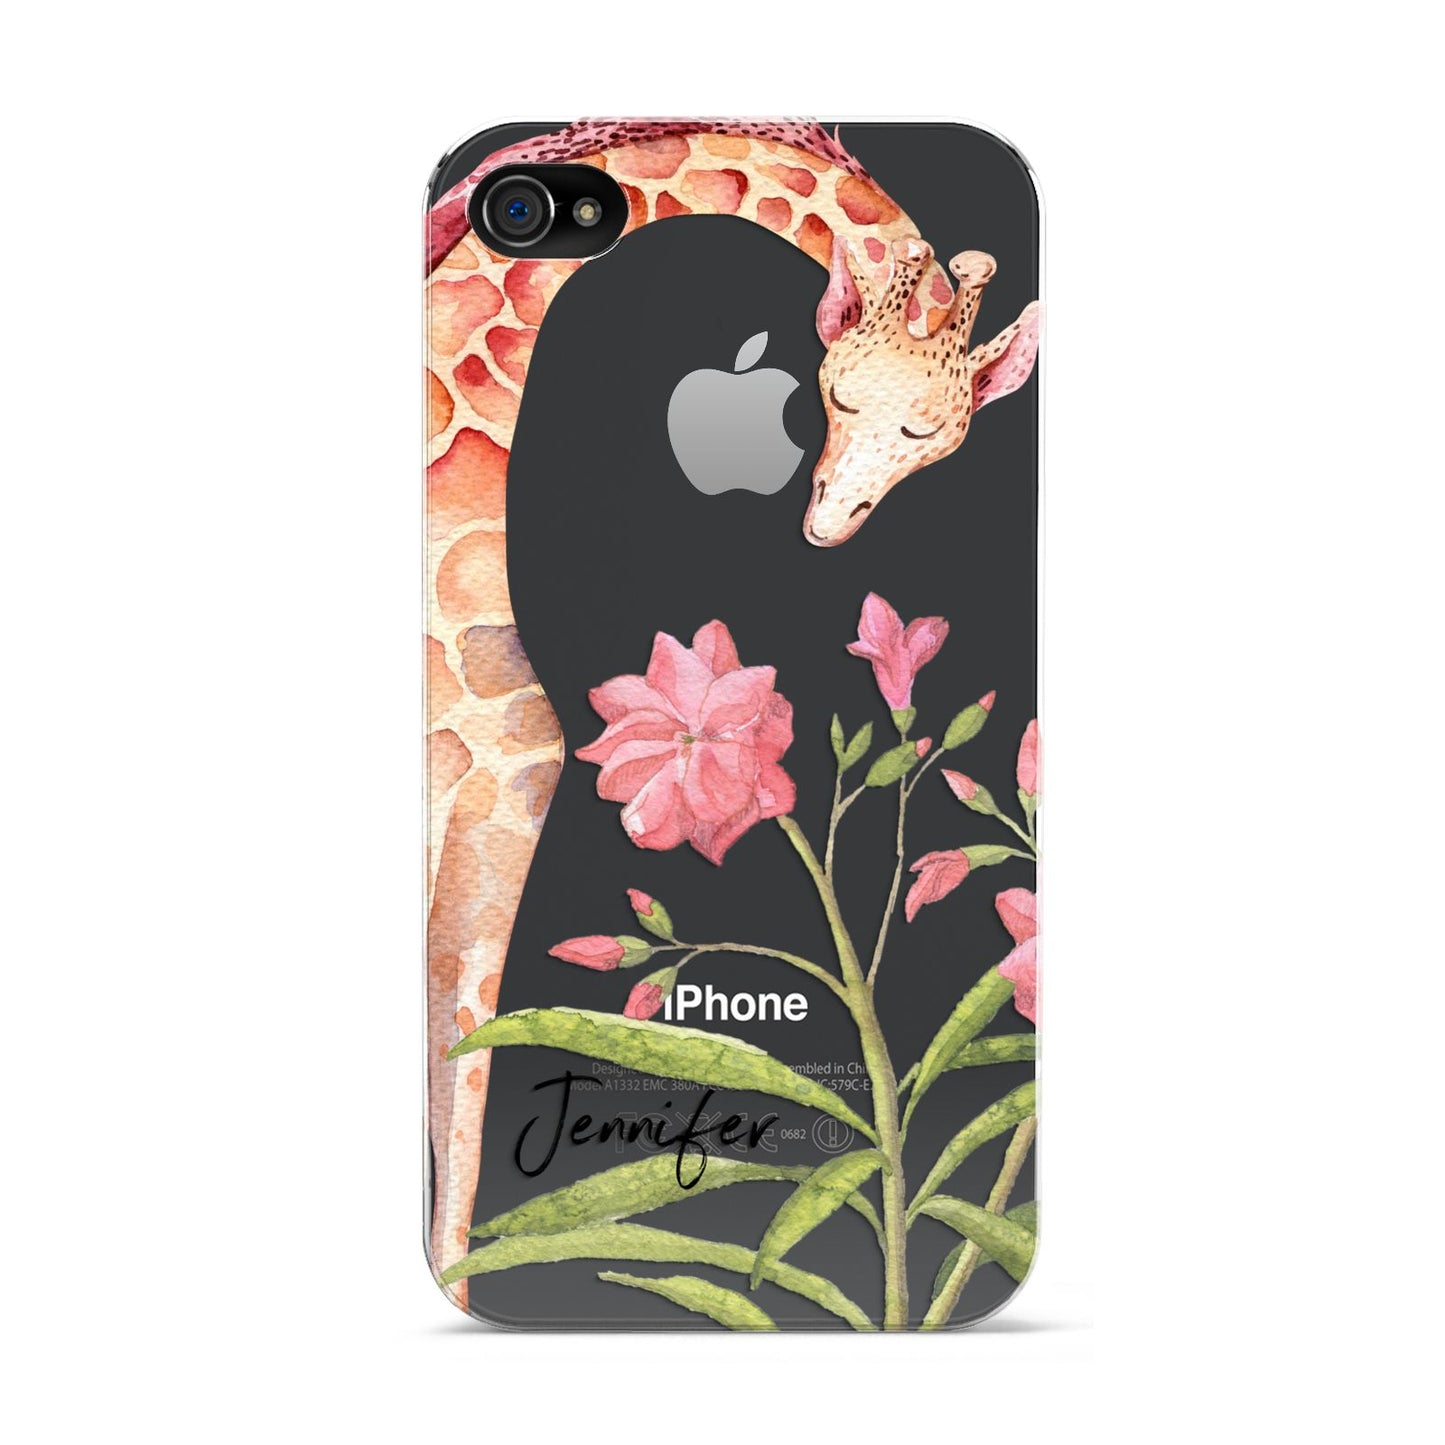 Personalised Giraffe Apple iPhone 4s Case